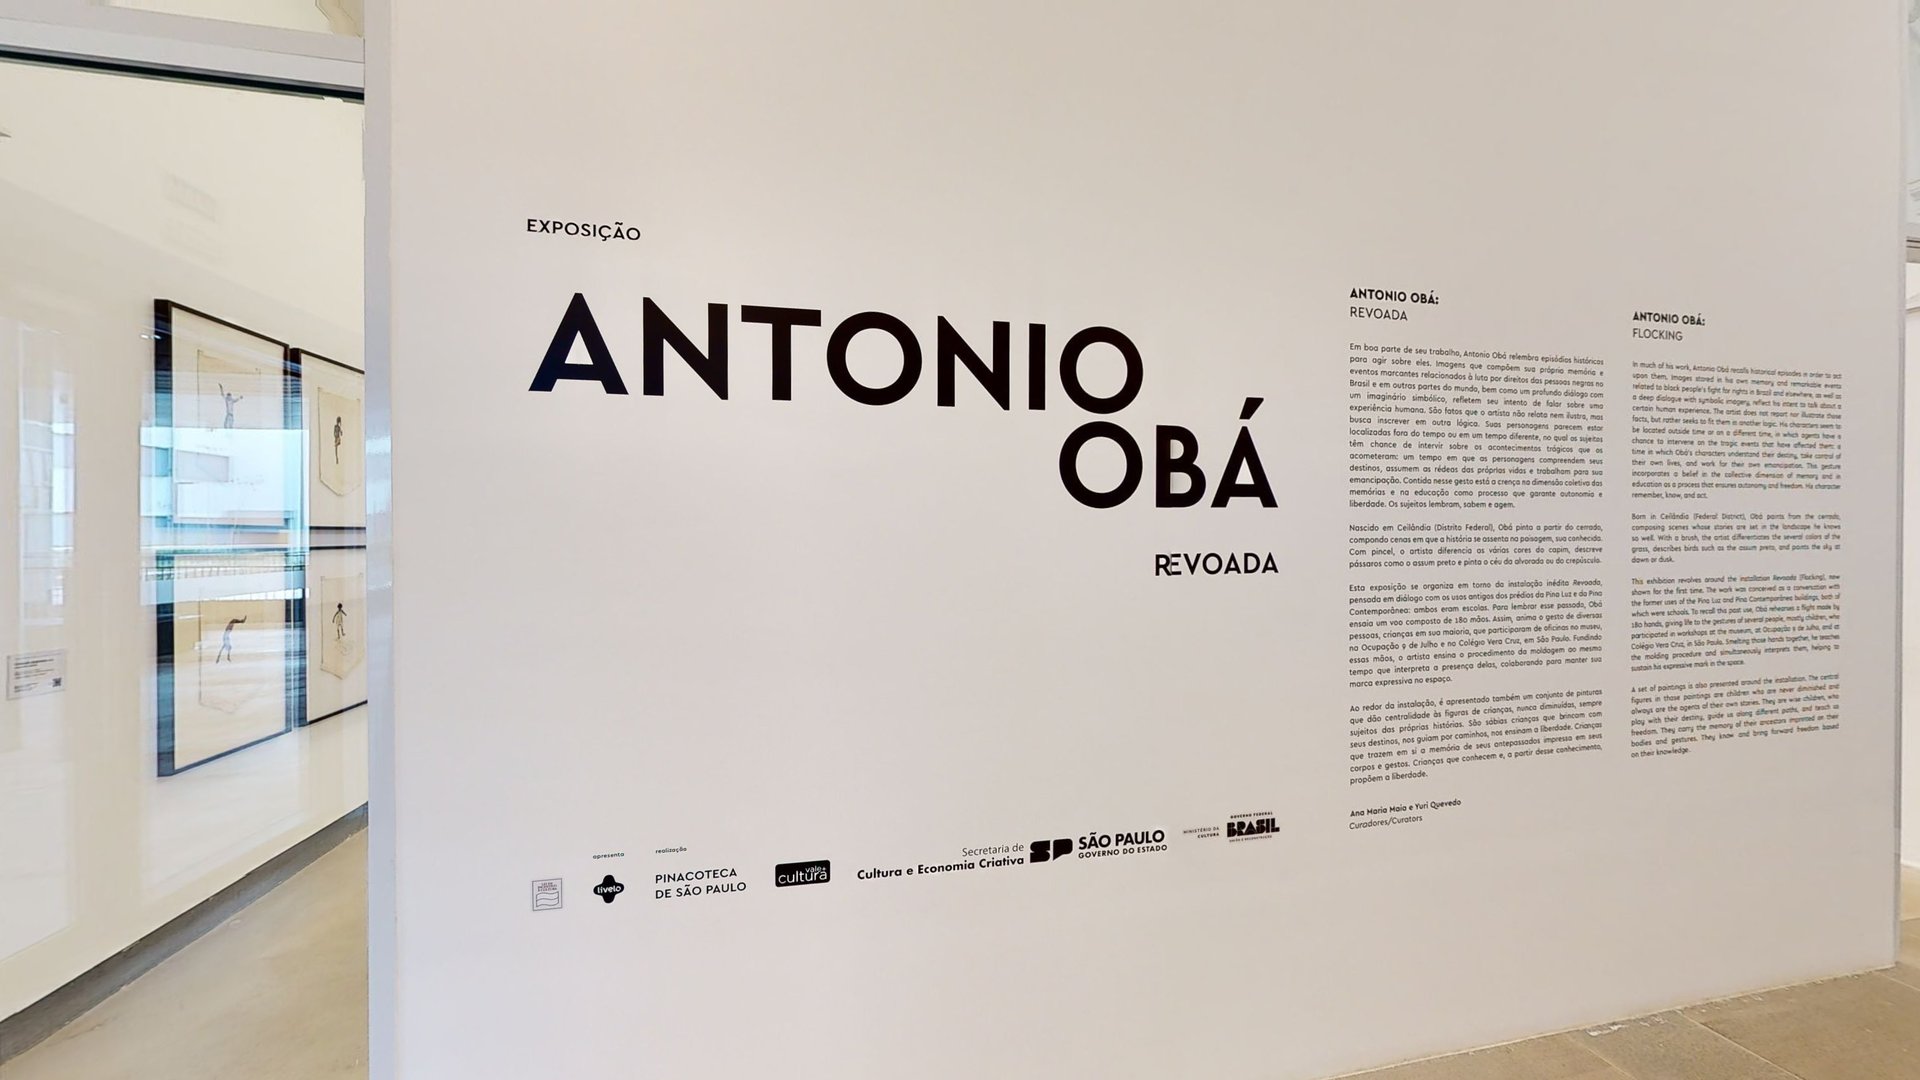 Antônio Obá  Revoada - PinaContemporanea - Tour Virtual